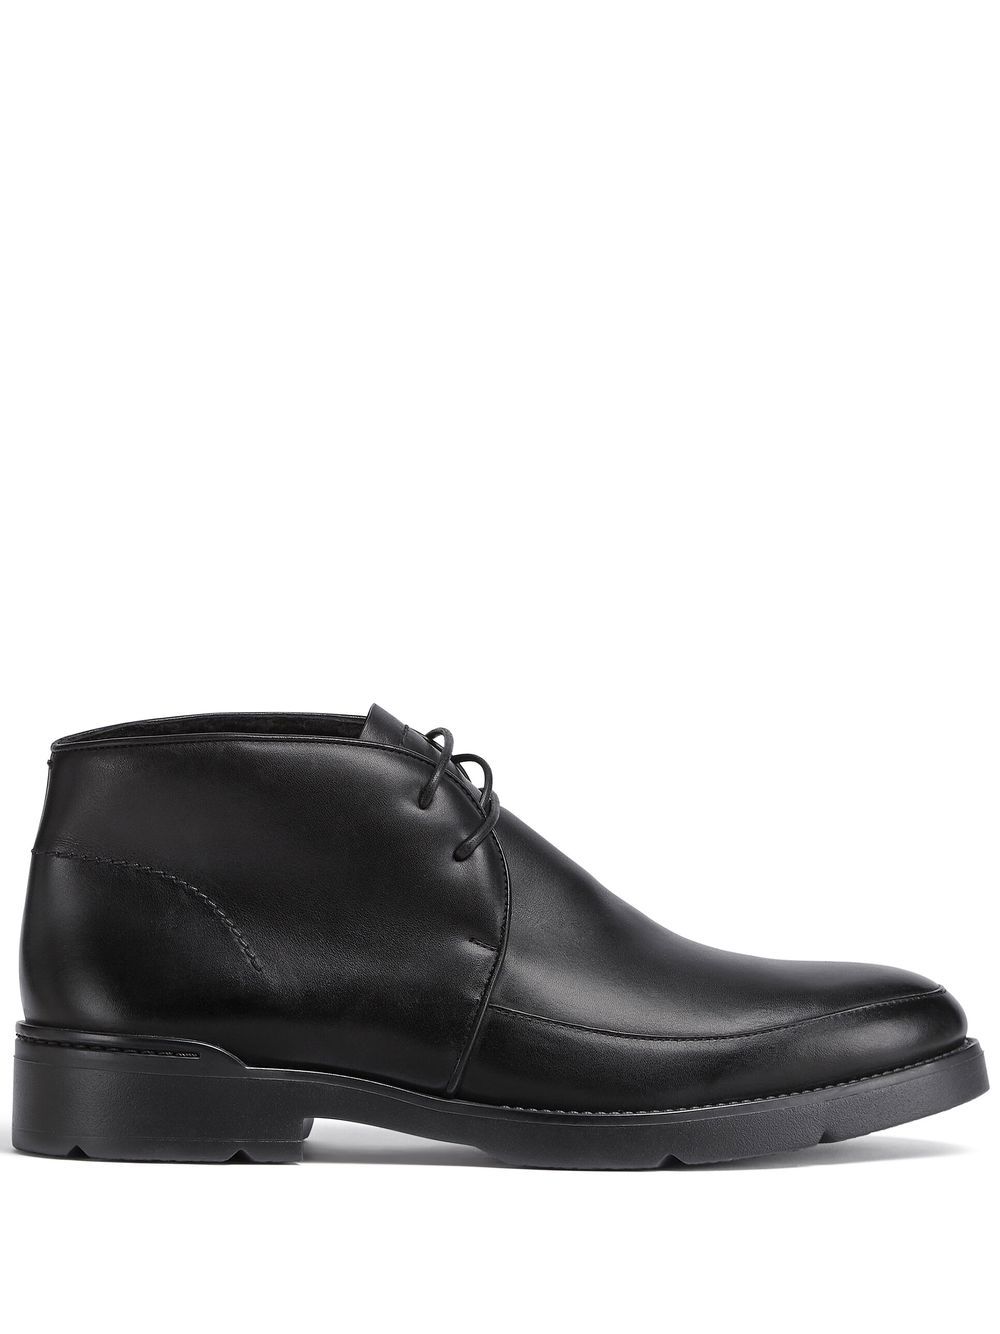 Zegna Cortina leather ankle boots - Black von Zegna